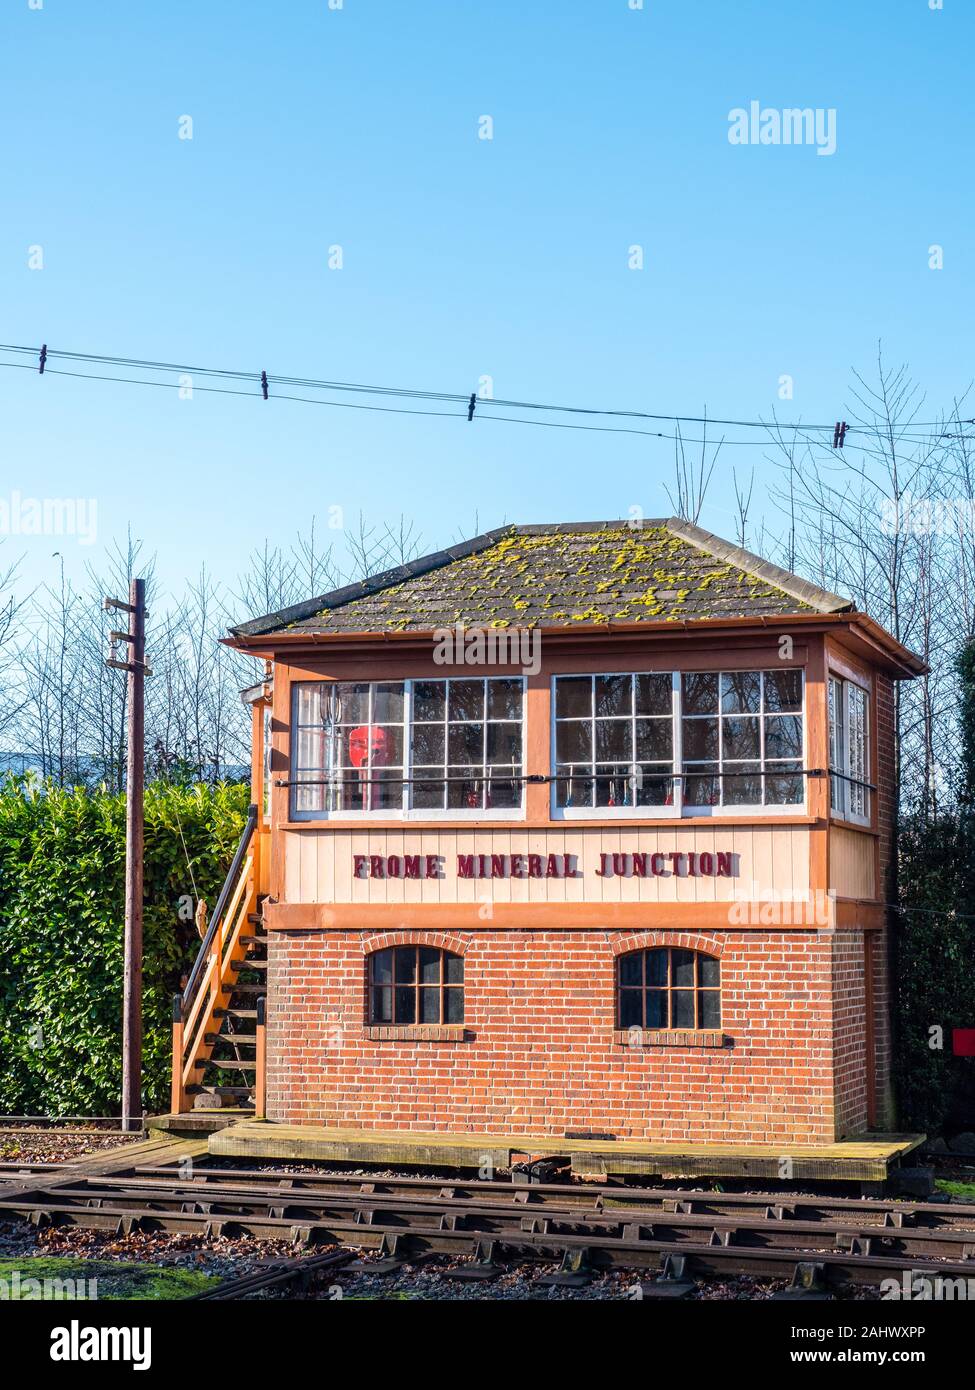 Signal fort de jonction minéral Frome, Didcot Railway Centre, Didcot, Oxfordshire, England, UK, FR. Banque D'Images